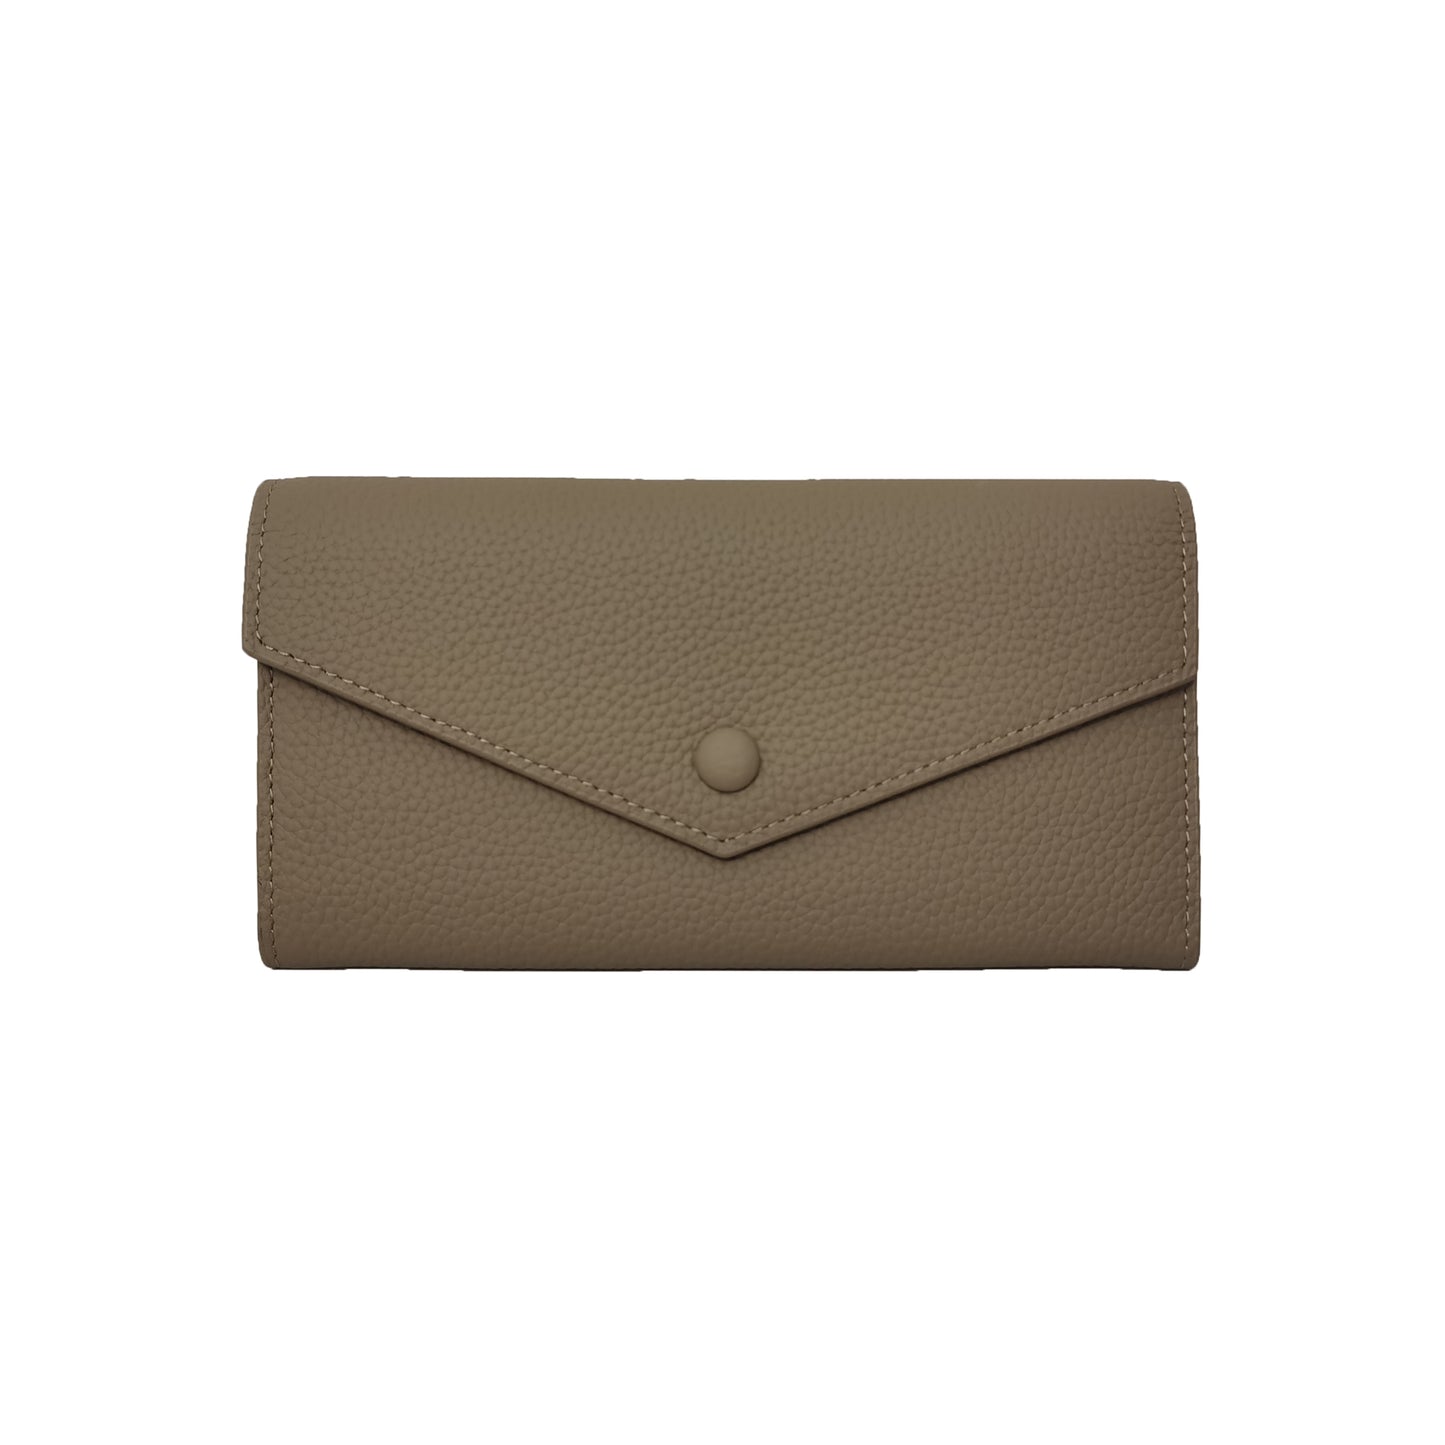 Women's genuine cowhide leather long wallet Envelope design